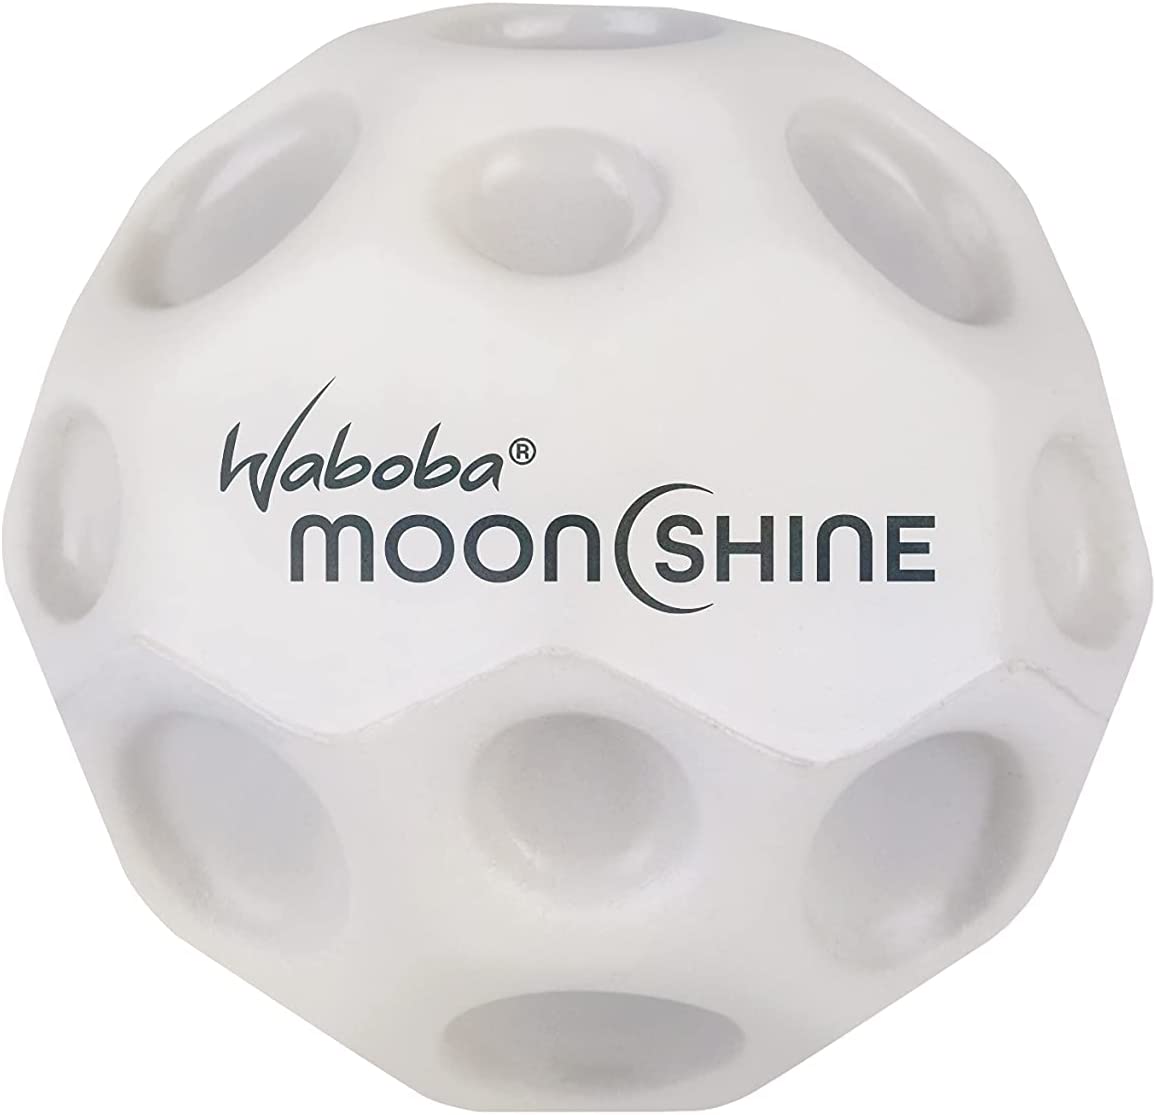 Waboba Moonshine ball